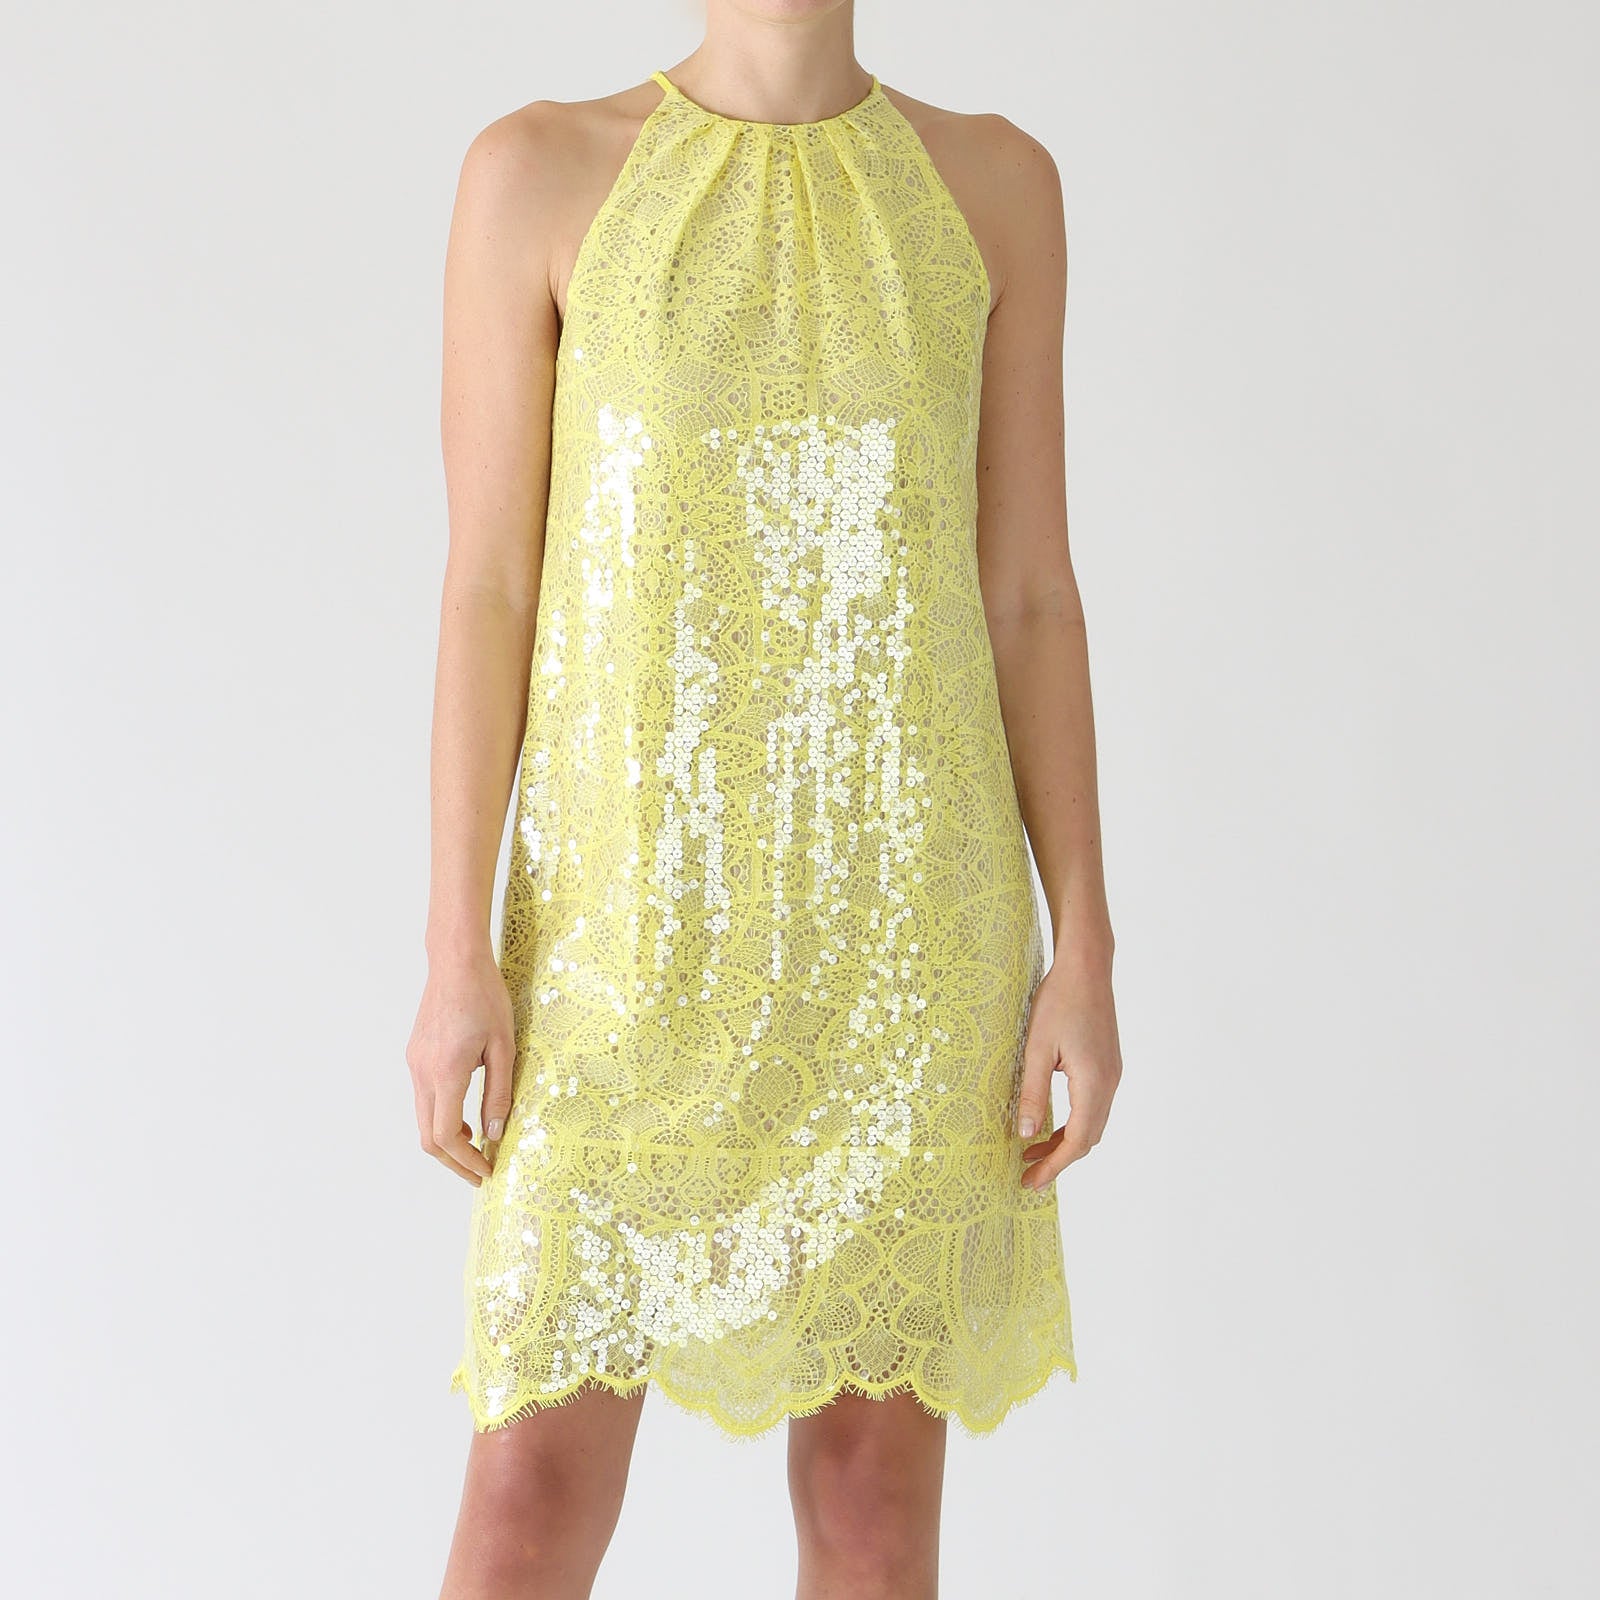 Maya Citrus Sequin Lace Dress